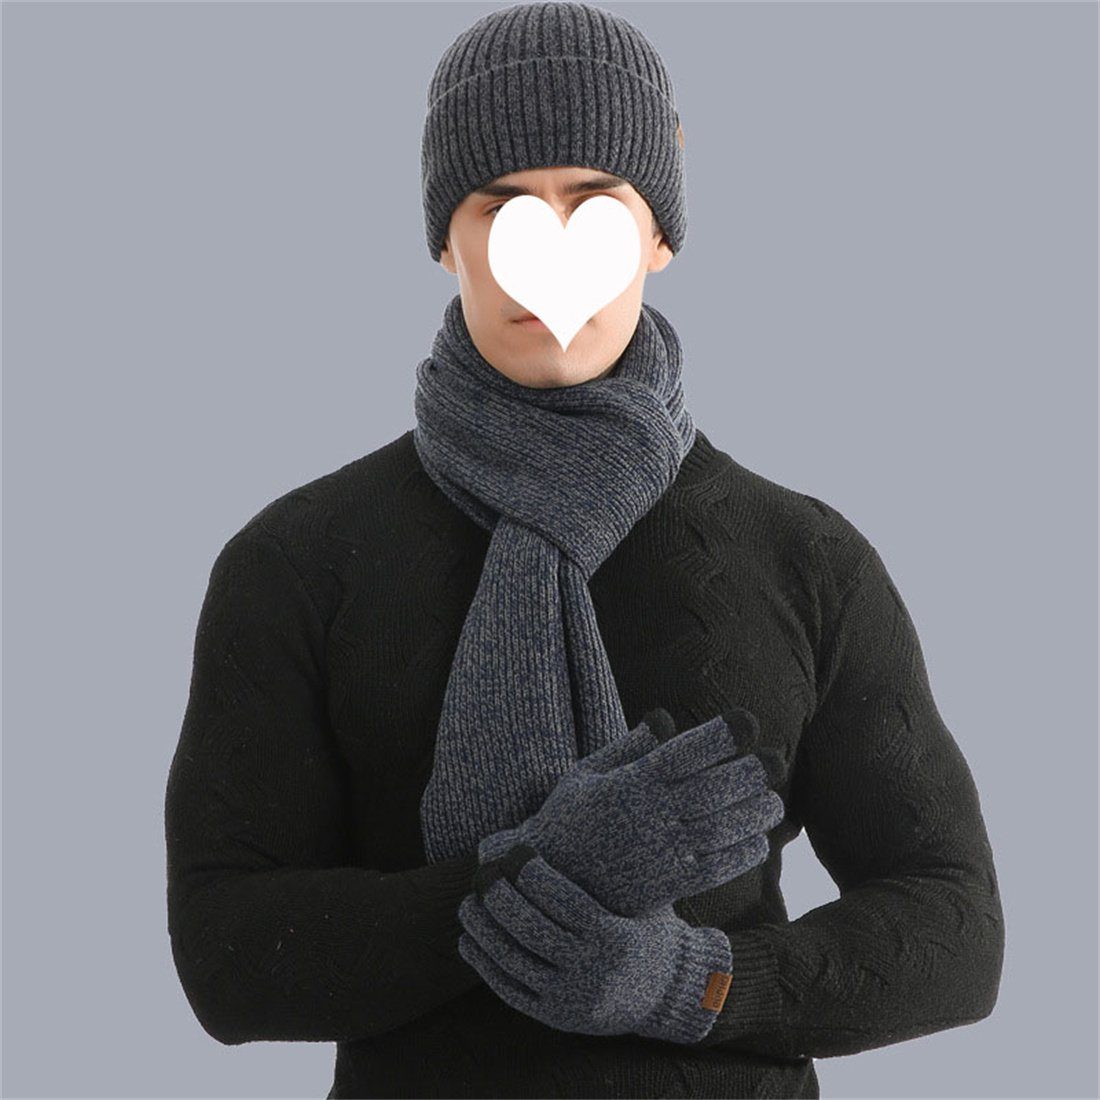 DÖRÖY Handschuhe verdickter aus Wolle,Warmer Strickmütze Wintermütze Mützenschal 3er Set blau